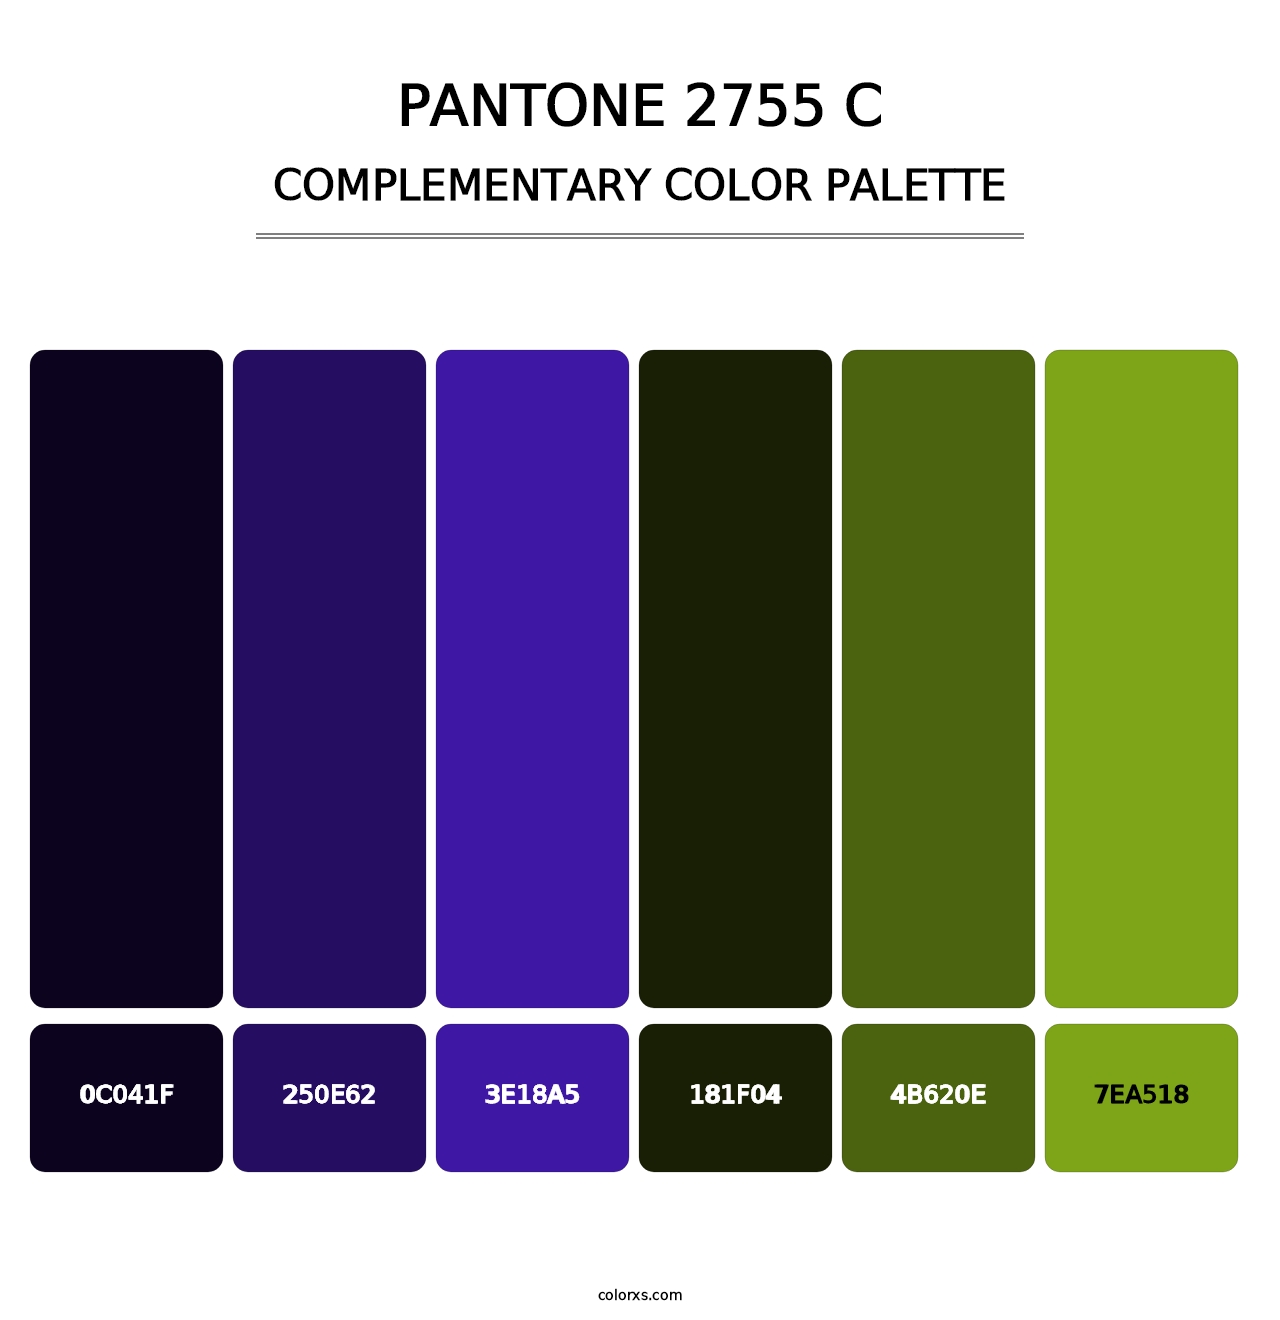 PANTONE 2755 C - Complementary Color Palette